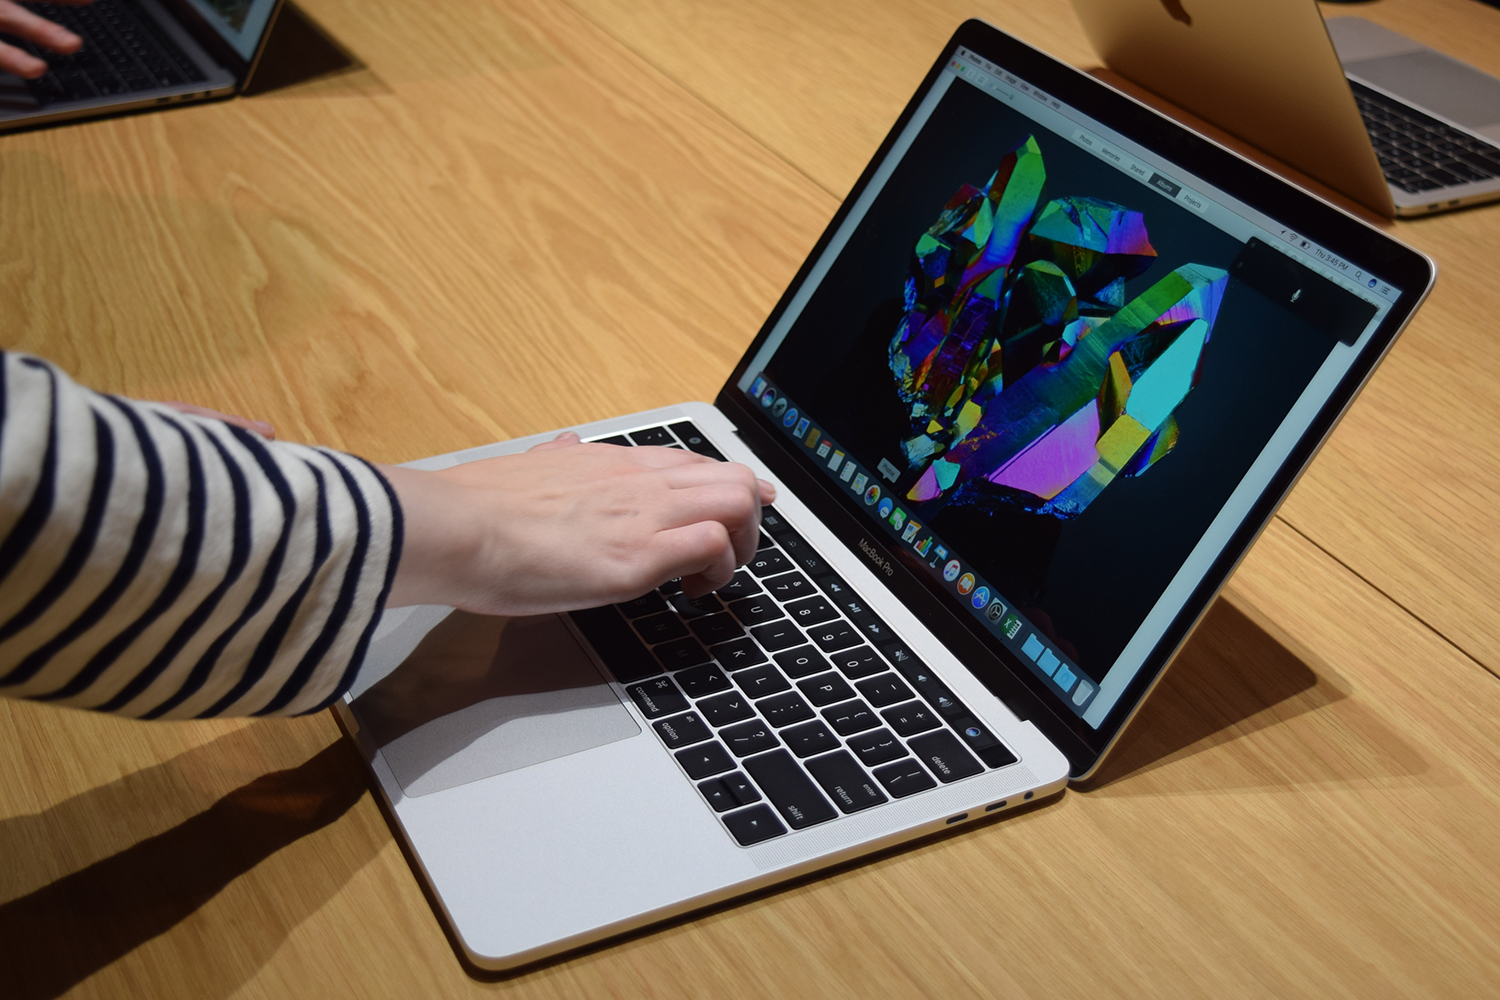 Mac | Macbook, iMac, Mac Pro and Mac Mini News 19 | Digital Trends